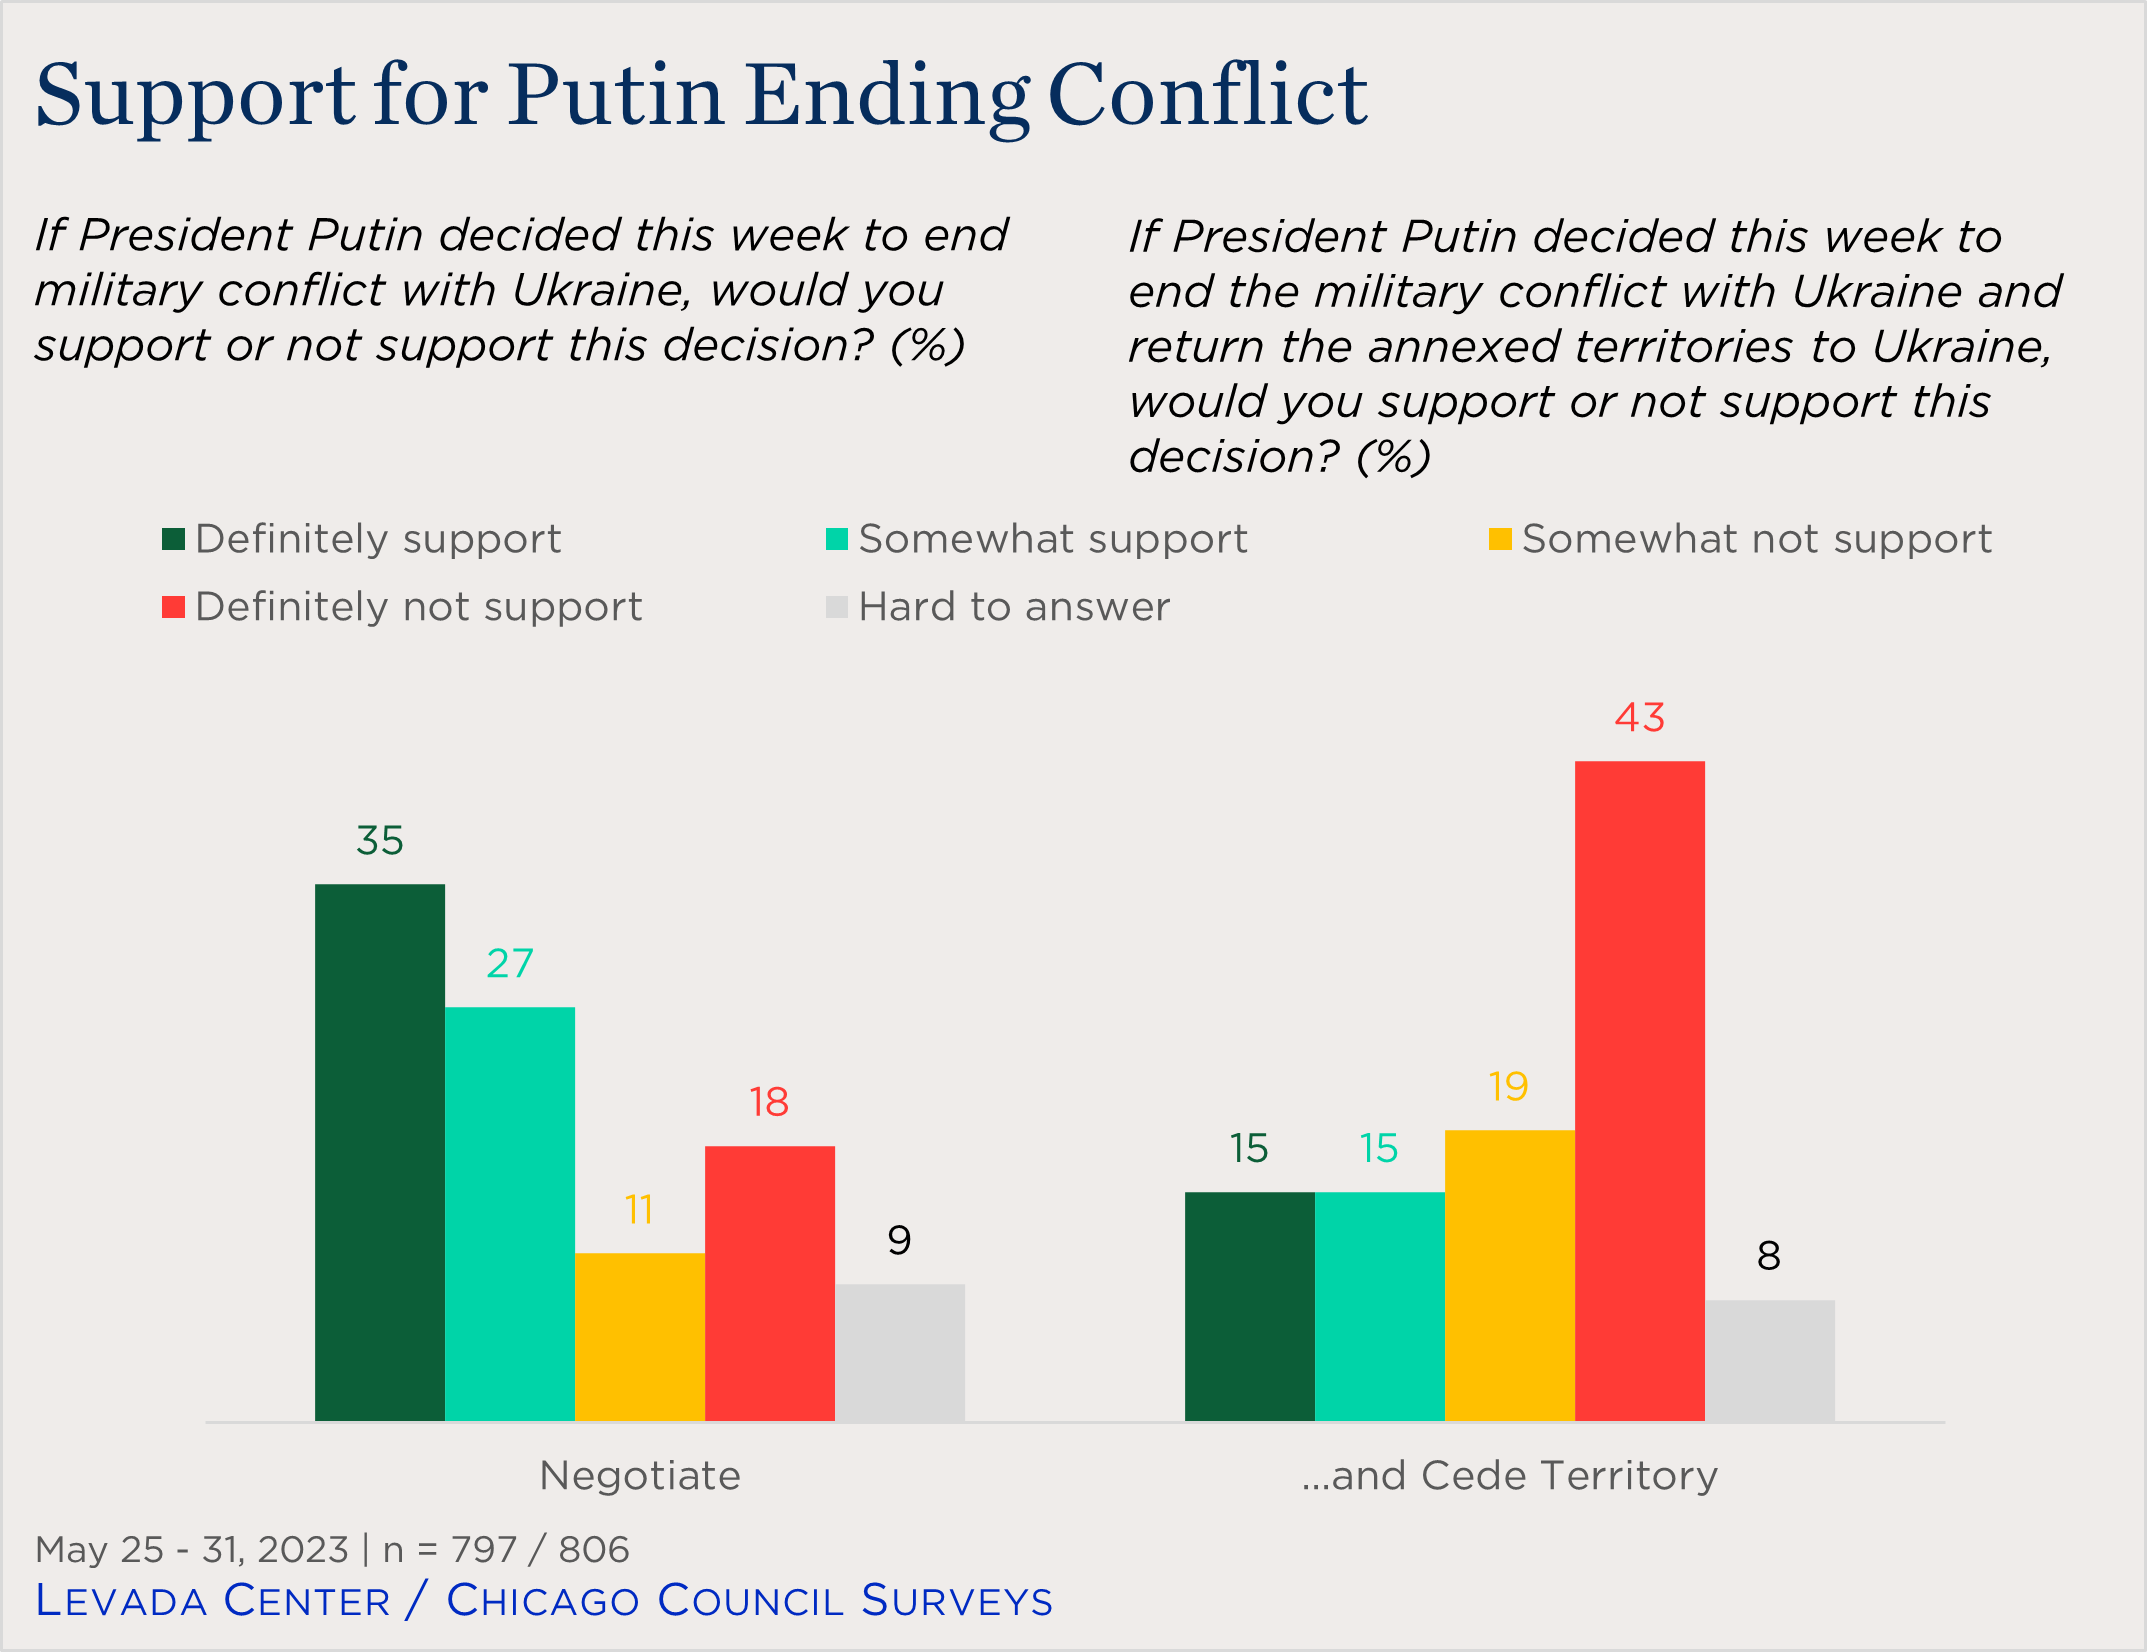 "column chart showing support for Putin ending Ukraine conflict"